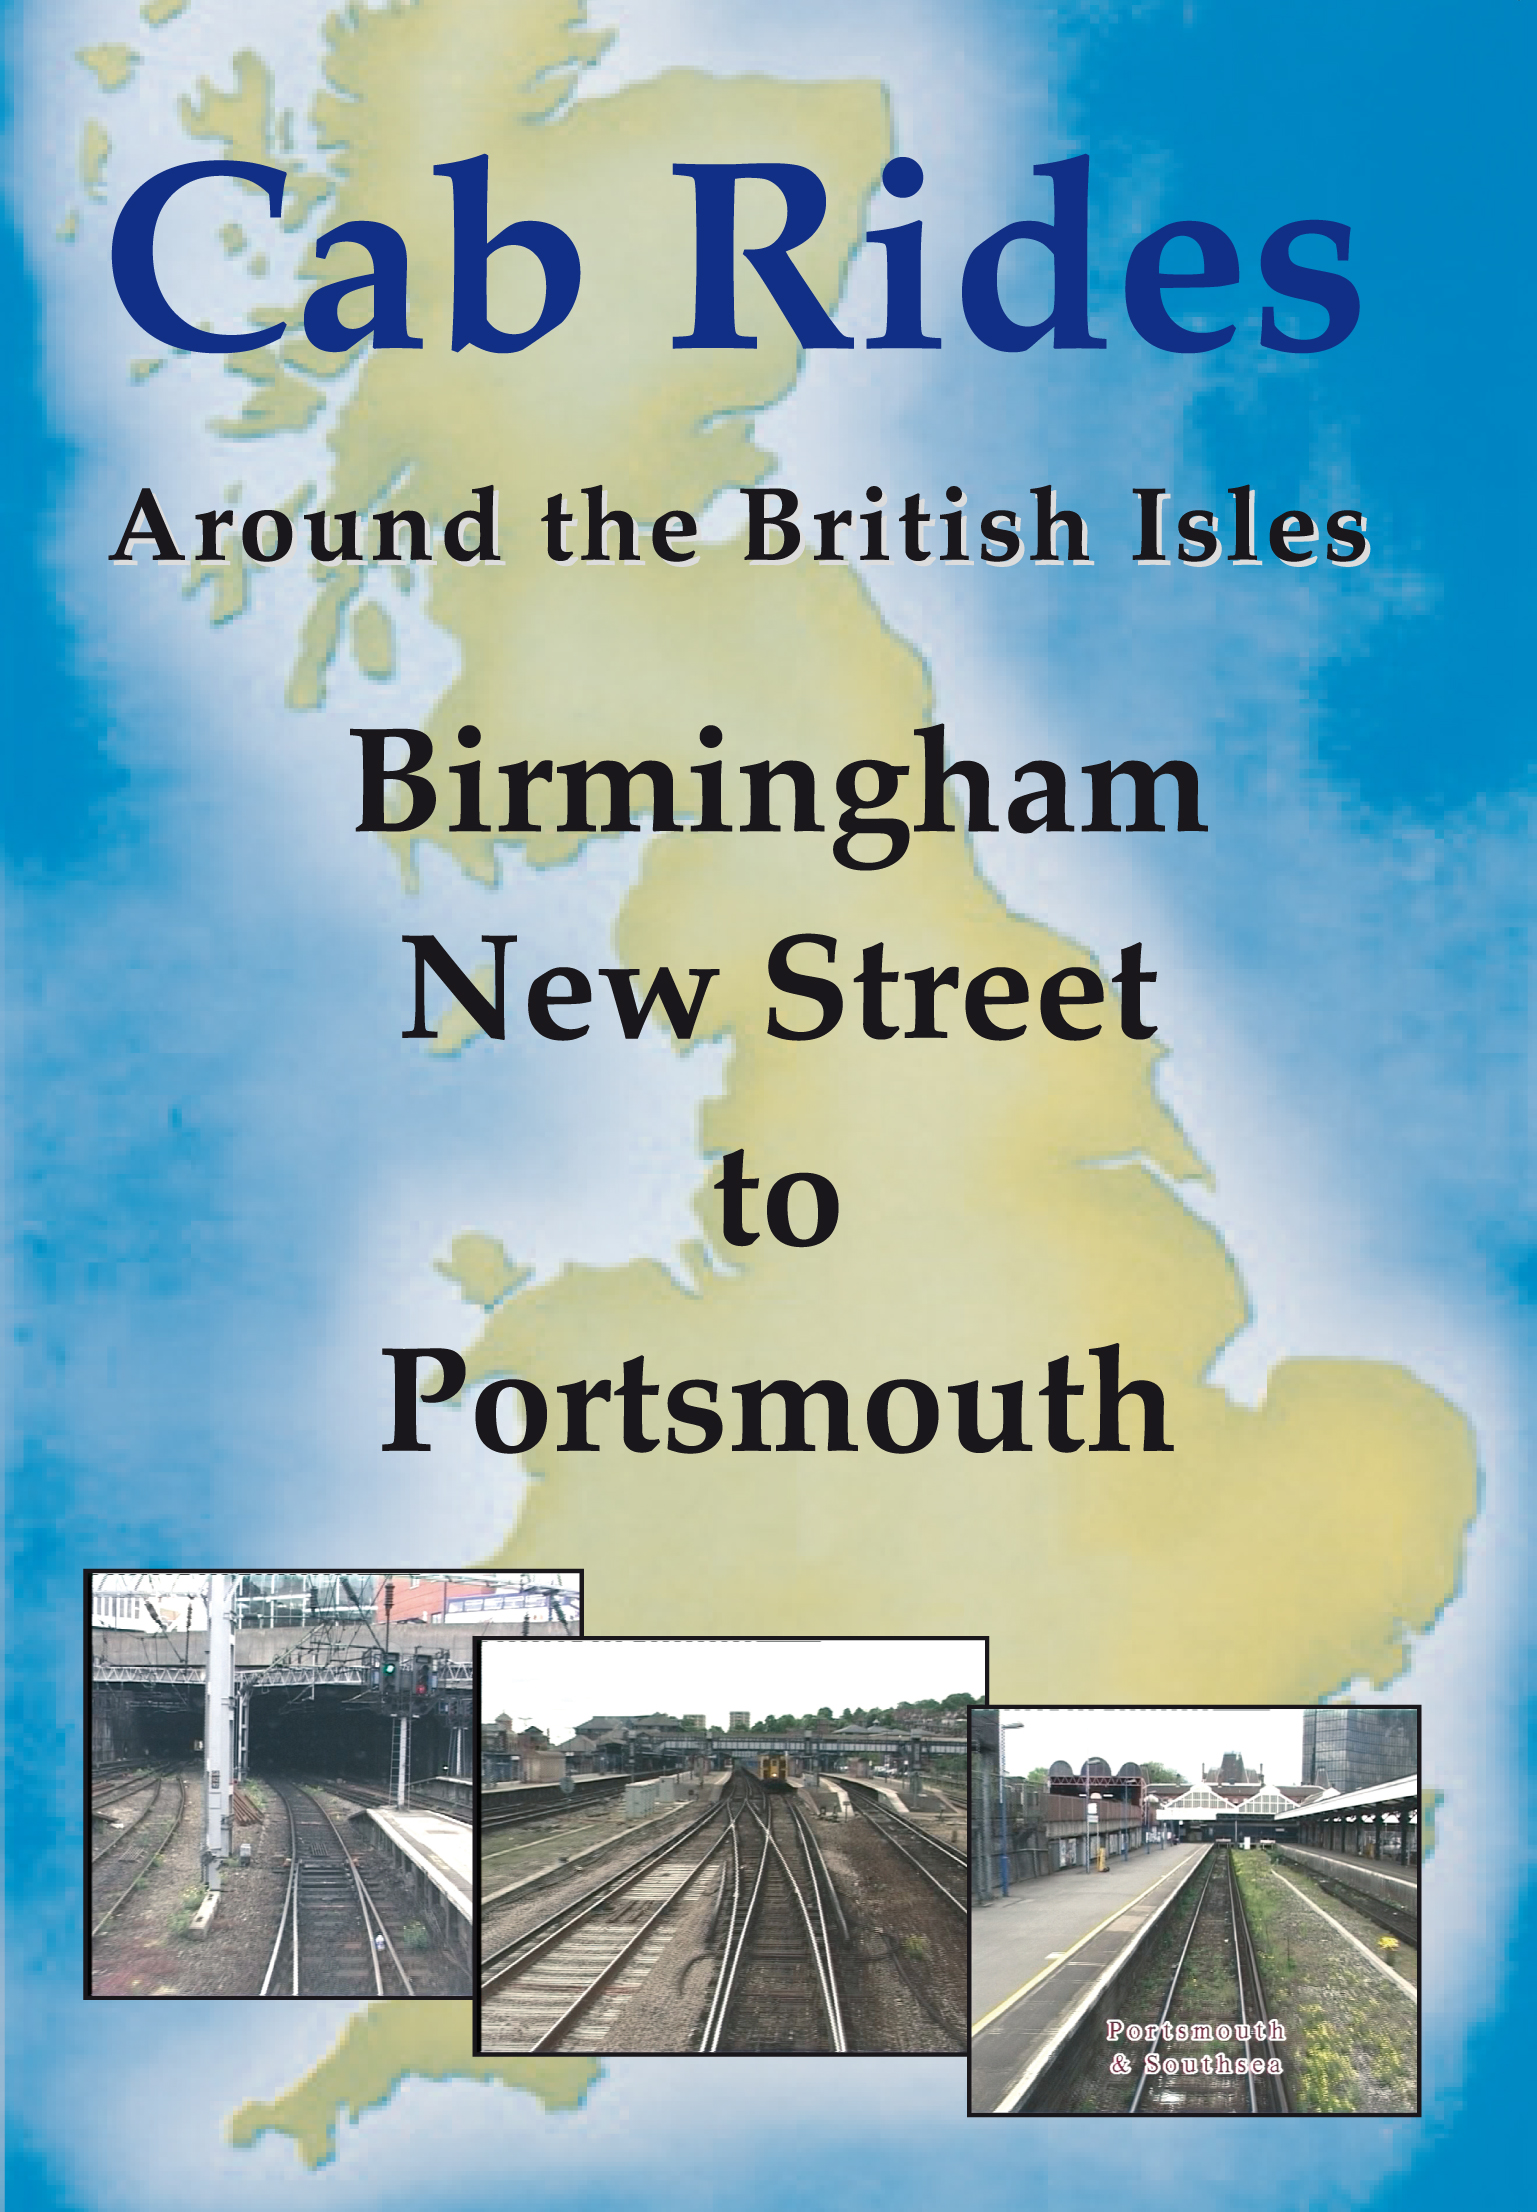 Cab Rides Around the British Isles: Birmingham New Street to Portsmouth in 2003